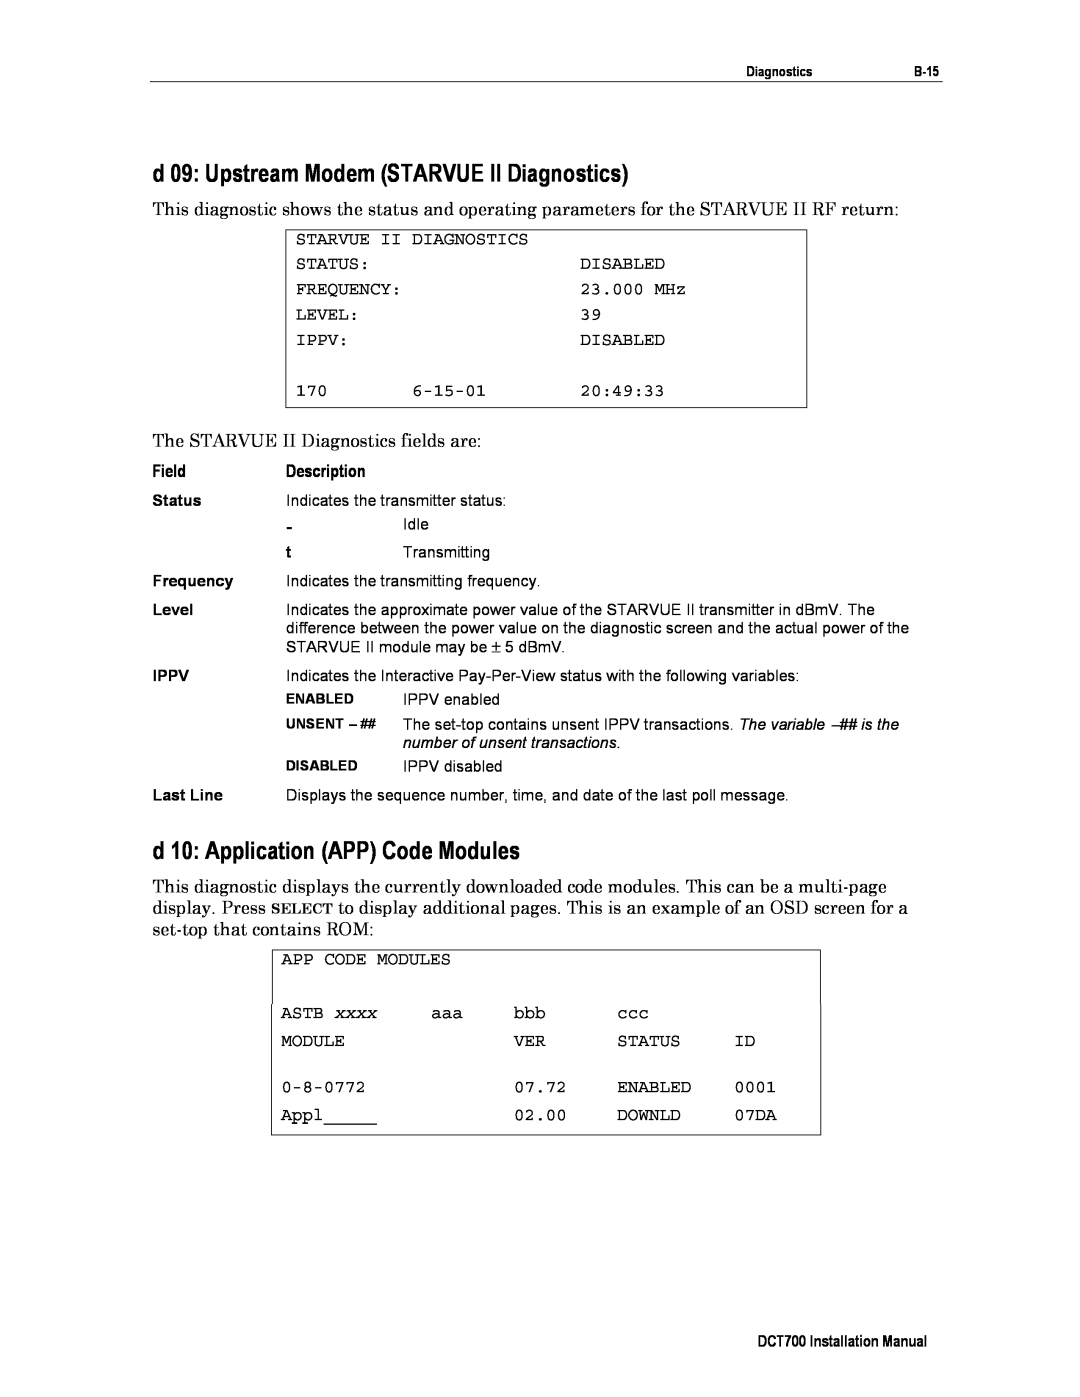 Motorola DTC700 d 09: Upstream Modem STARVUE II Diagnostics, d 10: Application APP Code Modules, Field, Description 